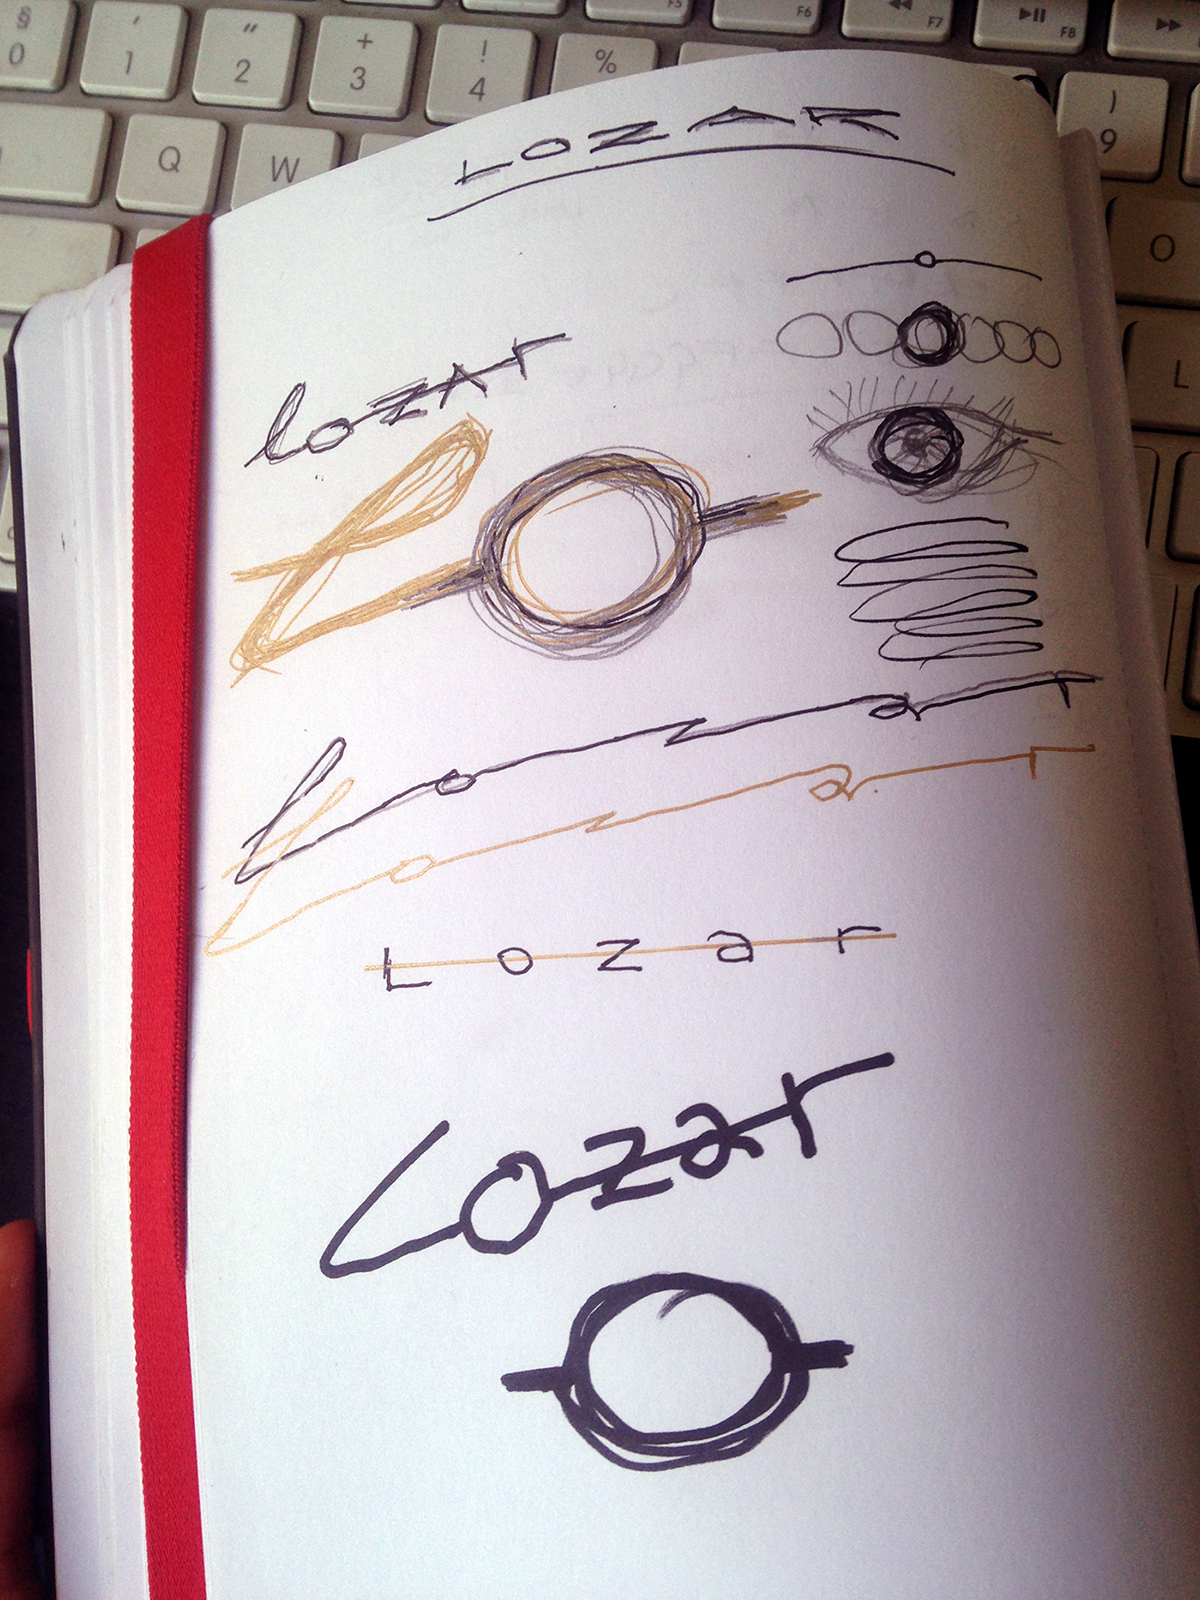 lozar branding  logo Project